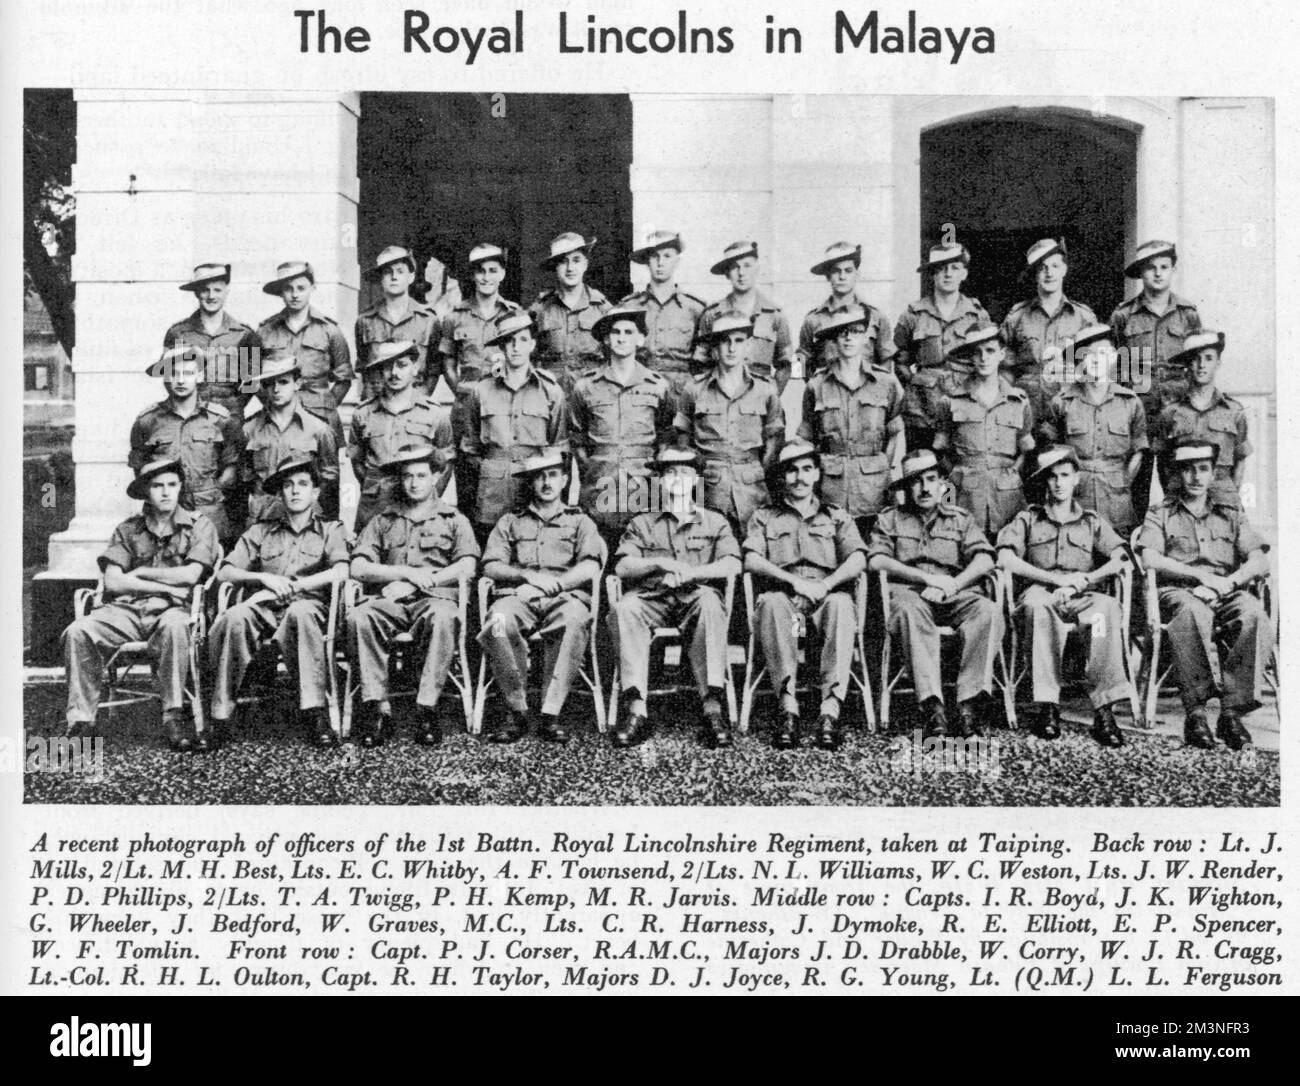 A photograph of officers of the 1st Battalion Royal Lincolnshire Regiment taken at Taiping.  Back row: Lt. J. Mills, 2/Lt. M.H. Best, Lts. E.C. Whitby, A.F. Townsend, 2/Lts N.L. Williams, W.C. Weston, Lts. J.W. Render, P.D. Phillips, 2/Lts. T.A .Twigg, P.H. Kemp, M.R. Jarvis.  Middle row: Capts. I.R. Boyd, J.K Wighton, G. Wheeler, J. Bedford, W.Graves, M.C., Lts. C.R. Harness, J. Dymoke, R.E. Elliott, E.P. Spencer, W.F. Tomlin.  Front row: Capt. P.J. Corser, R.A.M.C., Majors J.D Drabble, W.Corry, W.J.R. Cragg, Lt-Col R.H.L. Oulton, Capt. R.H Taylor, Majors D.J. Joyce, R.G. Young, Lt.(Q.M.) L.L Stock Photo